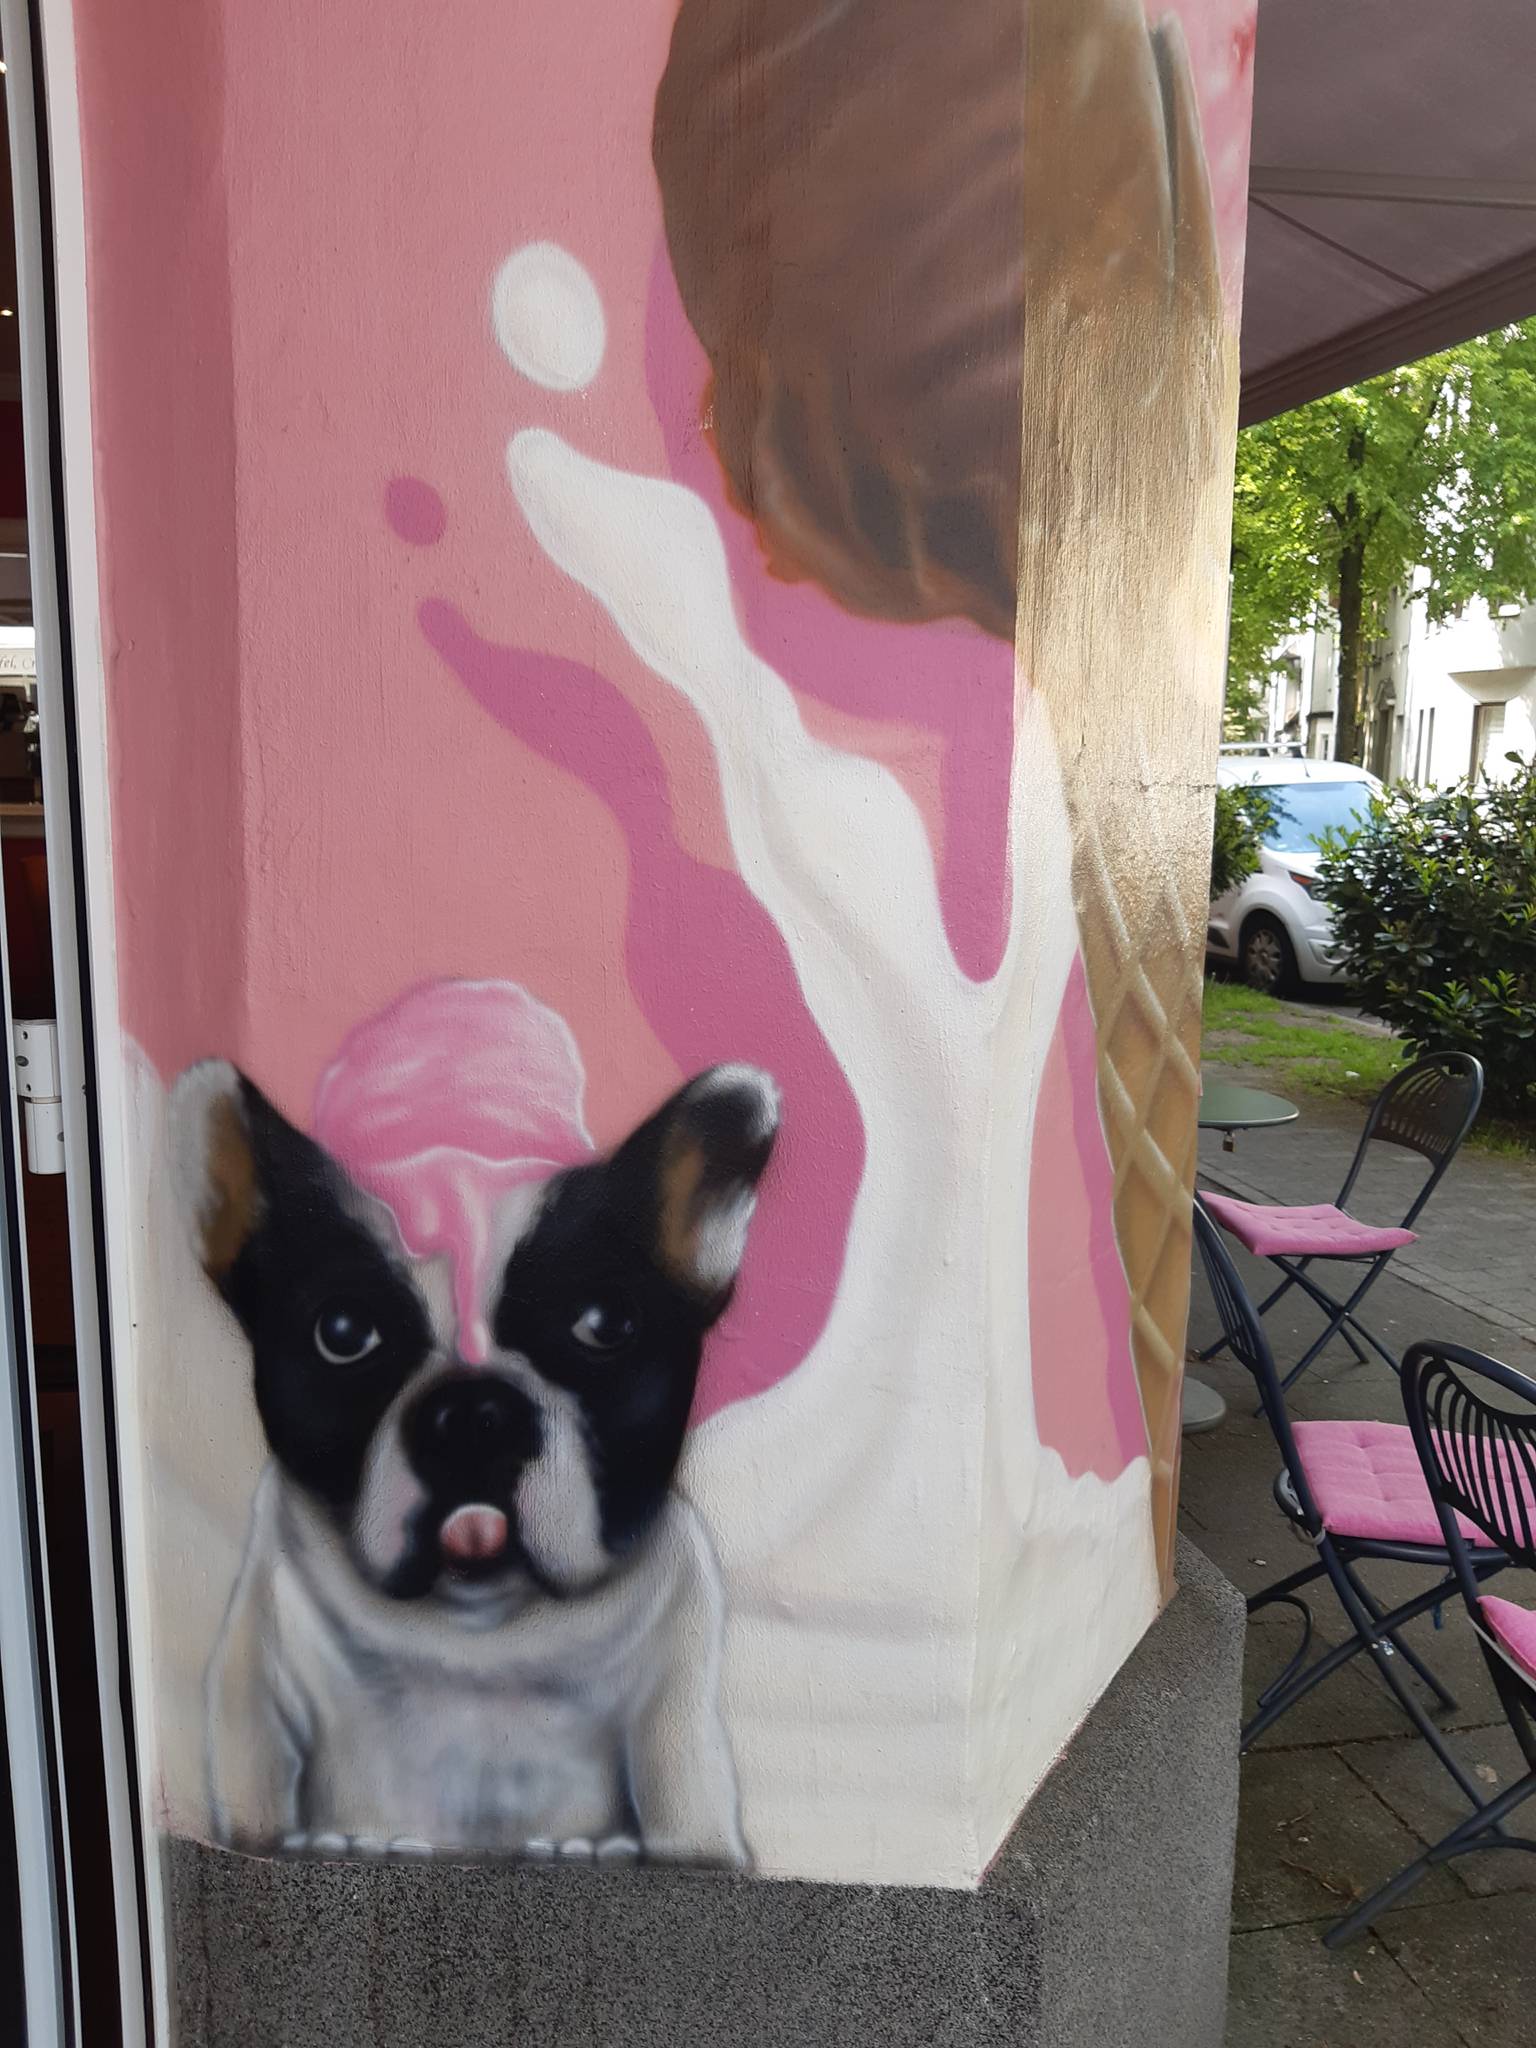 Mr. Graffiti&mdash;Ice Cream Nice Cream